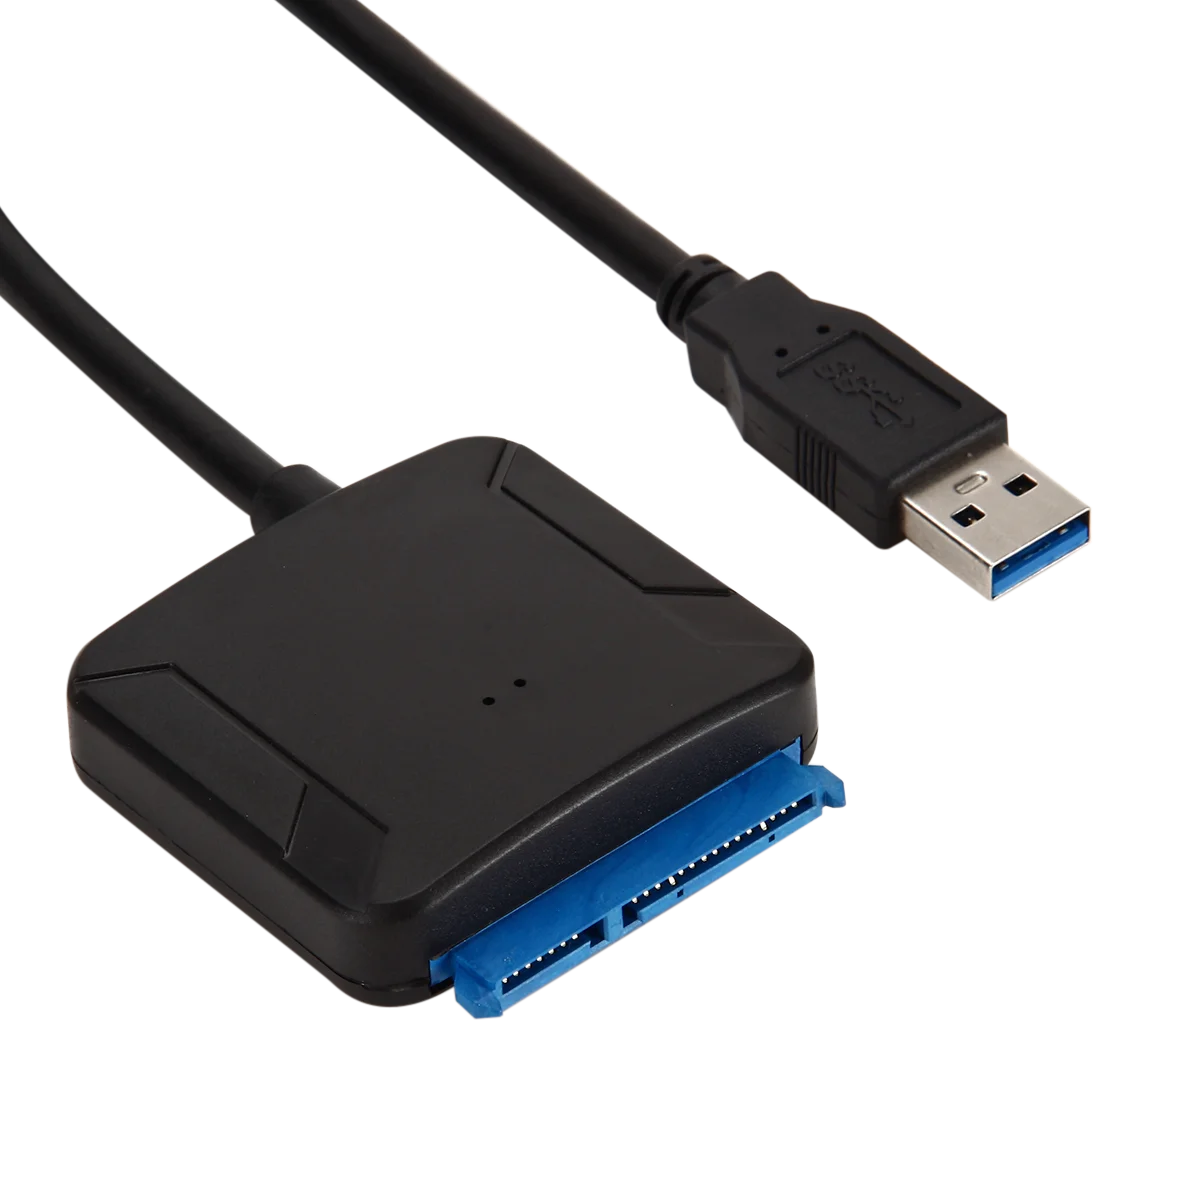 Адаптер SATA 3 USB. SSD 3.5 SATA адаптер USB3.0. Адаптер SATA USB 2.5 для ноутбука. USB SATA 3.5 HDD SATA адаптер. Адаптером sata usb купить